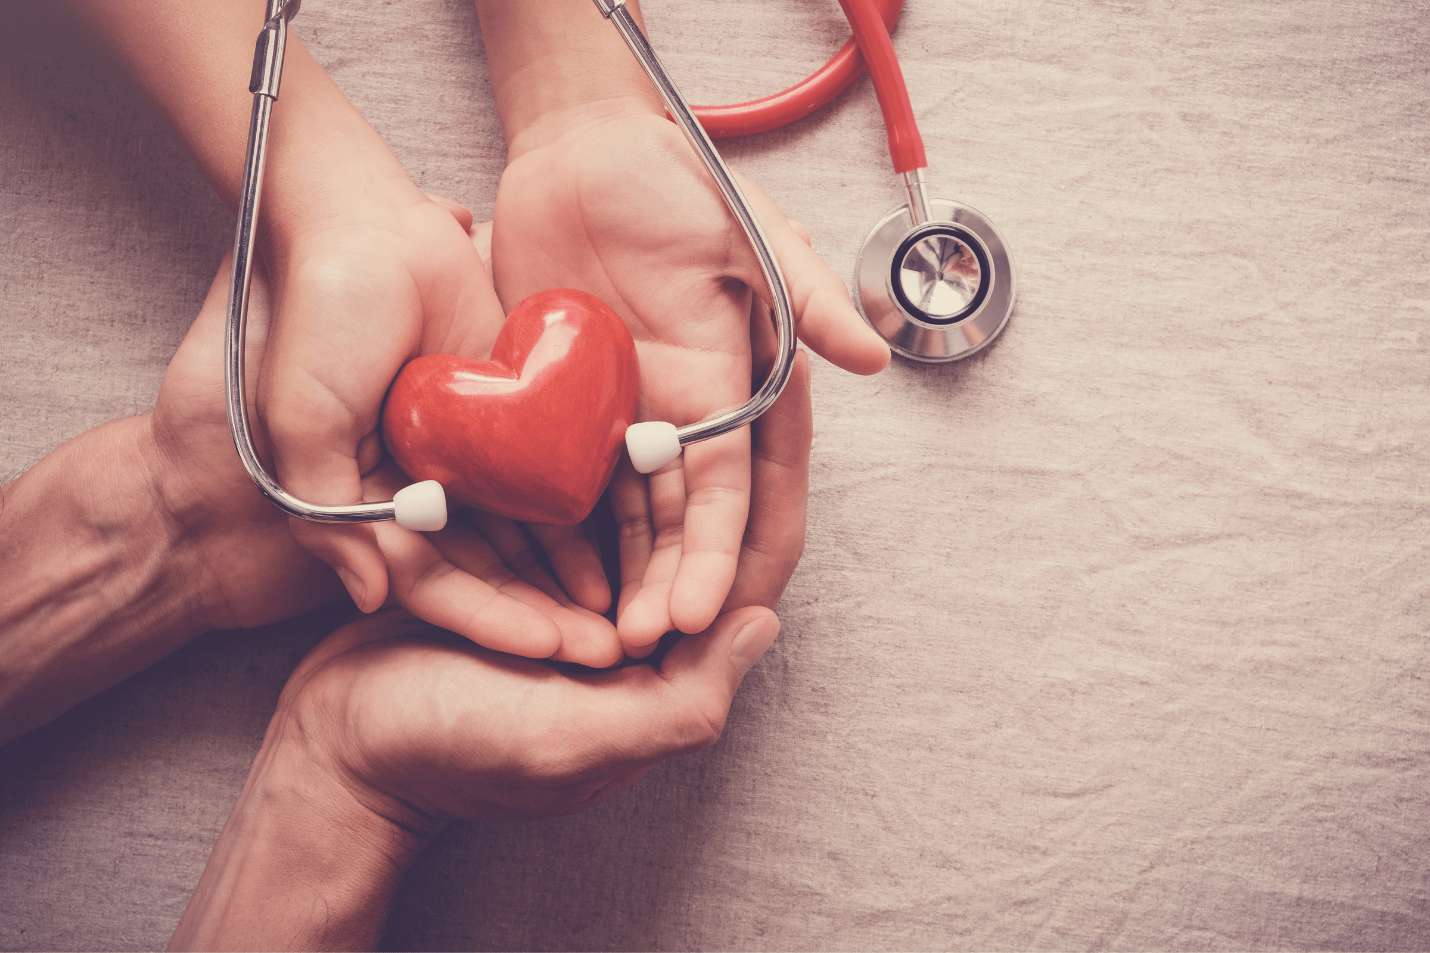 How To Get Good Cardiovascular Health